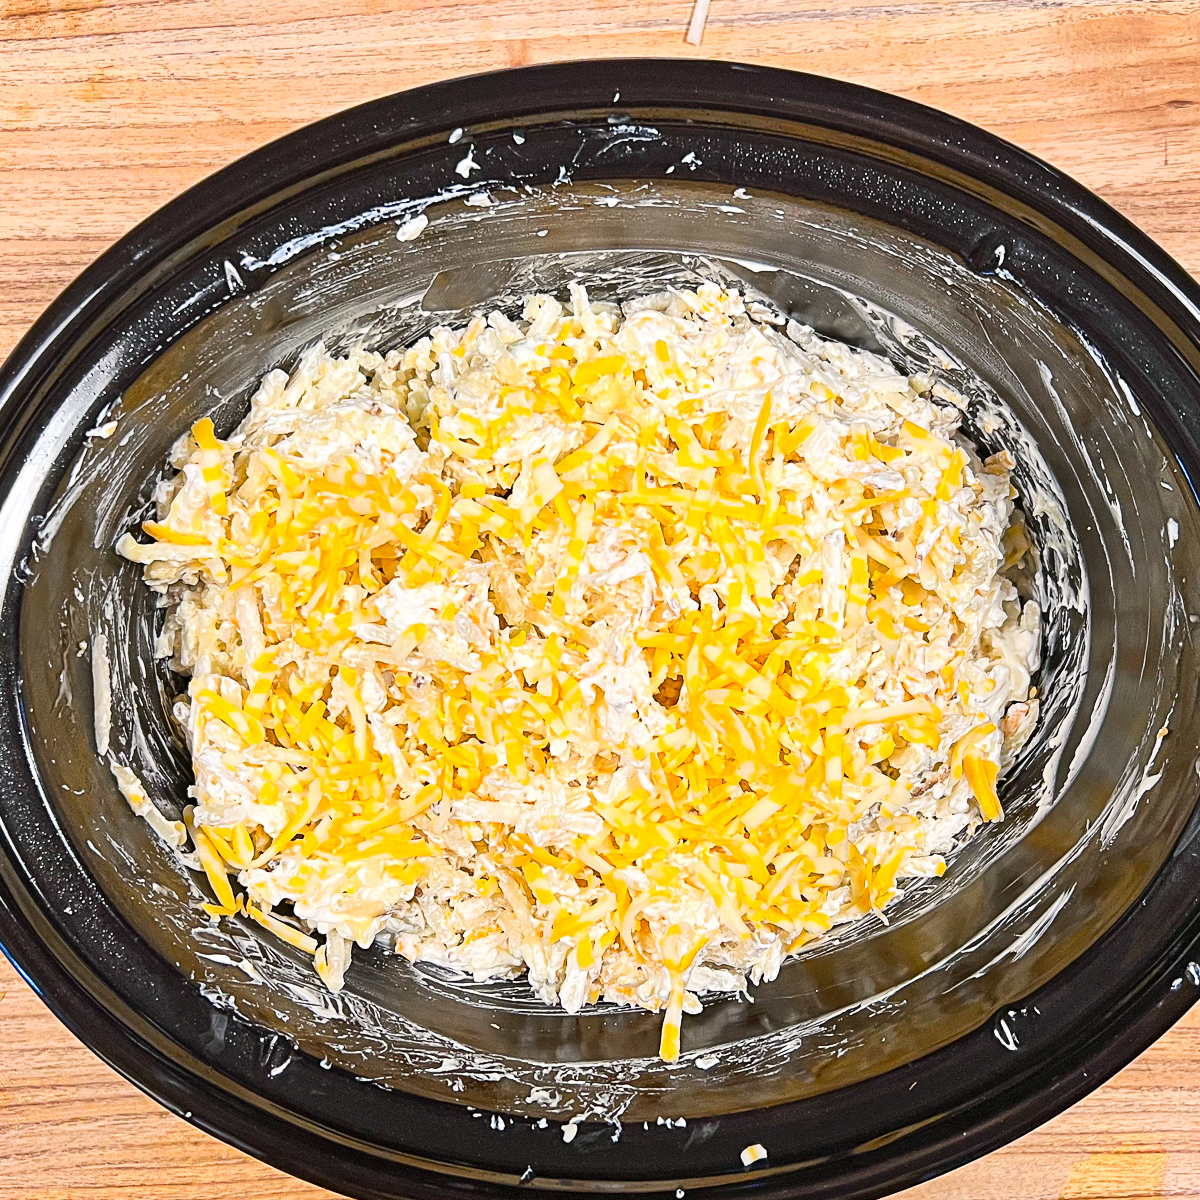 Cracker Barrel Cheesy potatoes recipe stir in crockpot